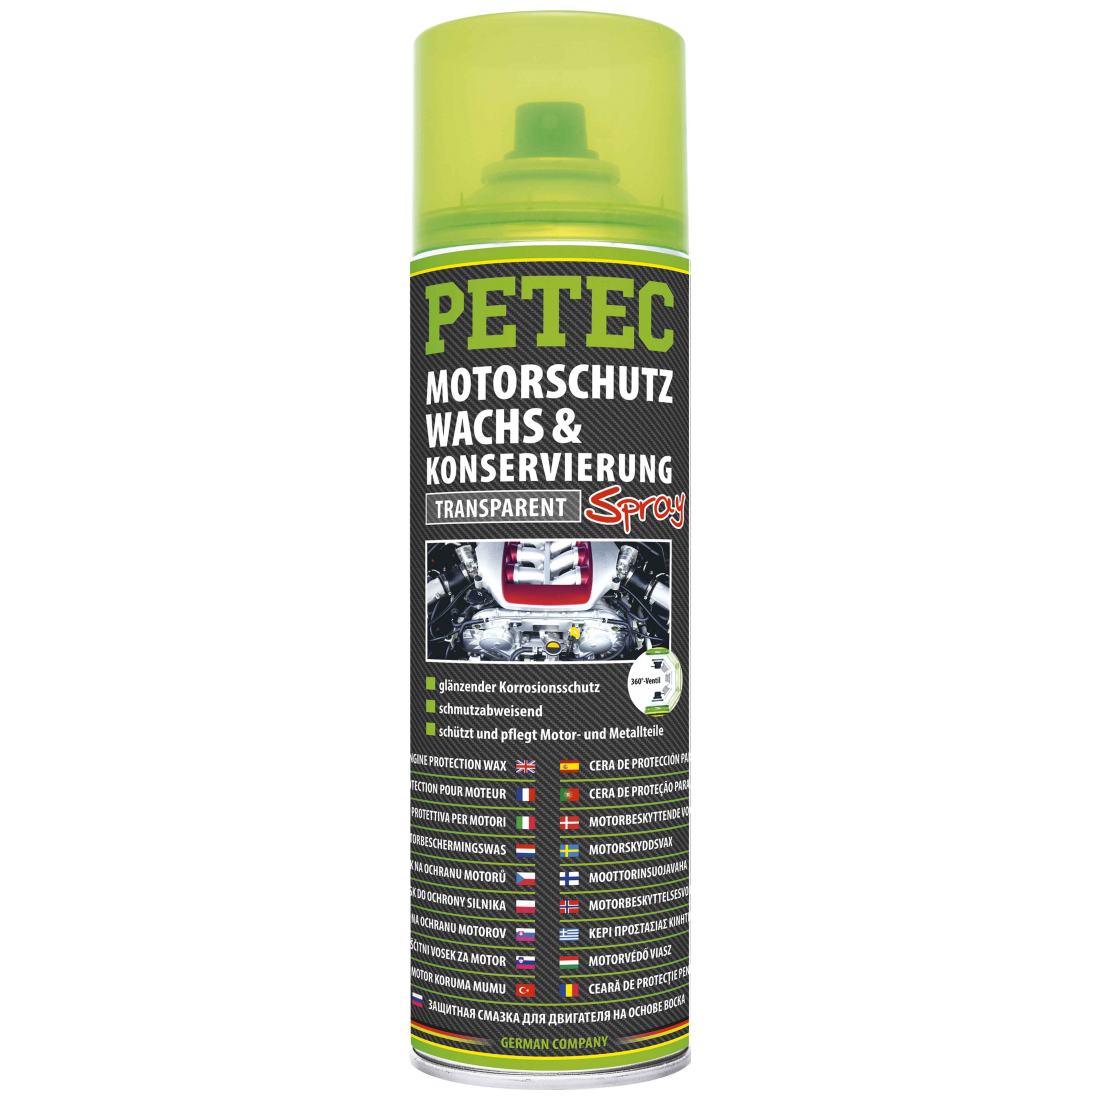 Petec Motorschutzwachs & Konservierung Transparent 500 ml 73430